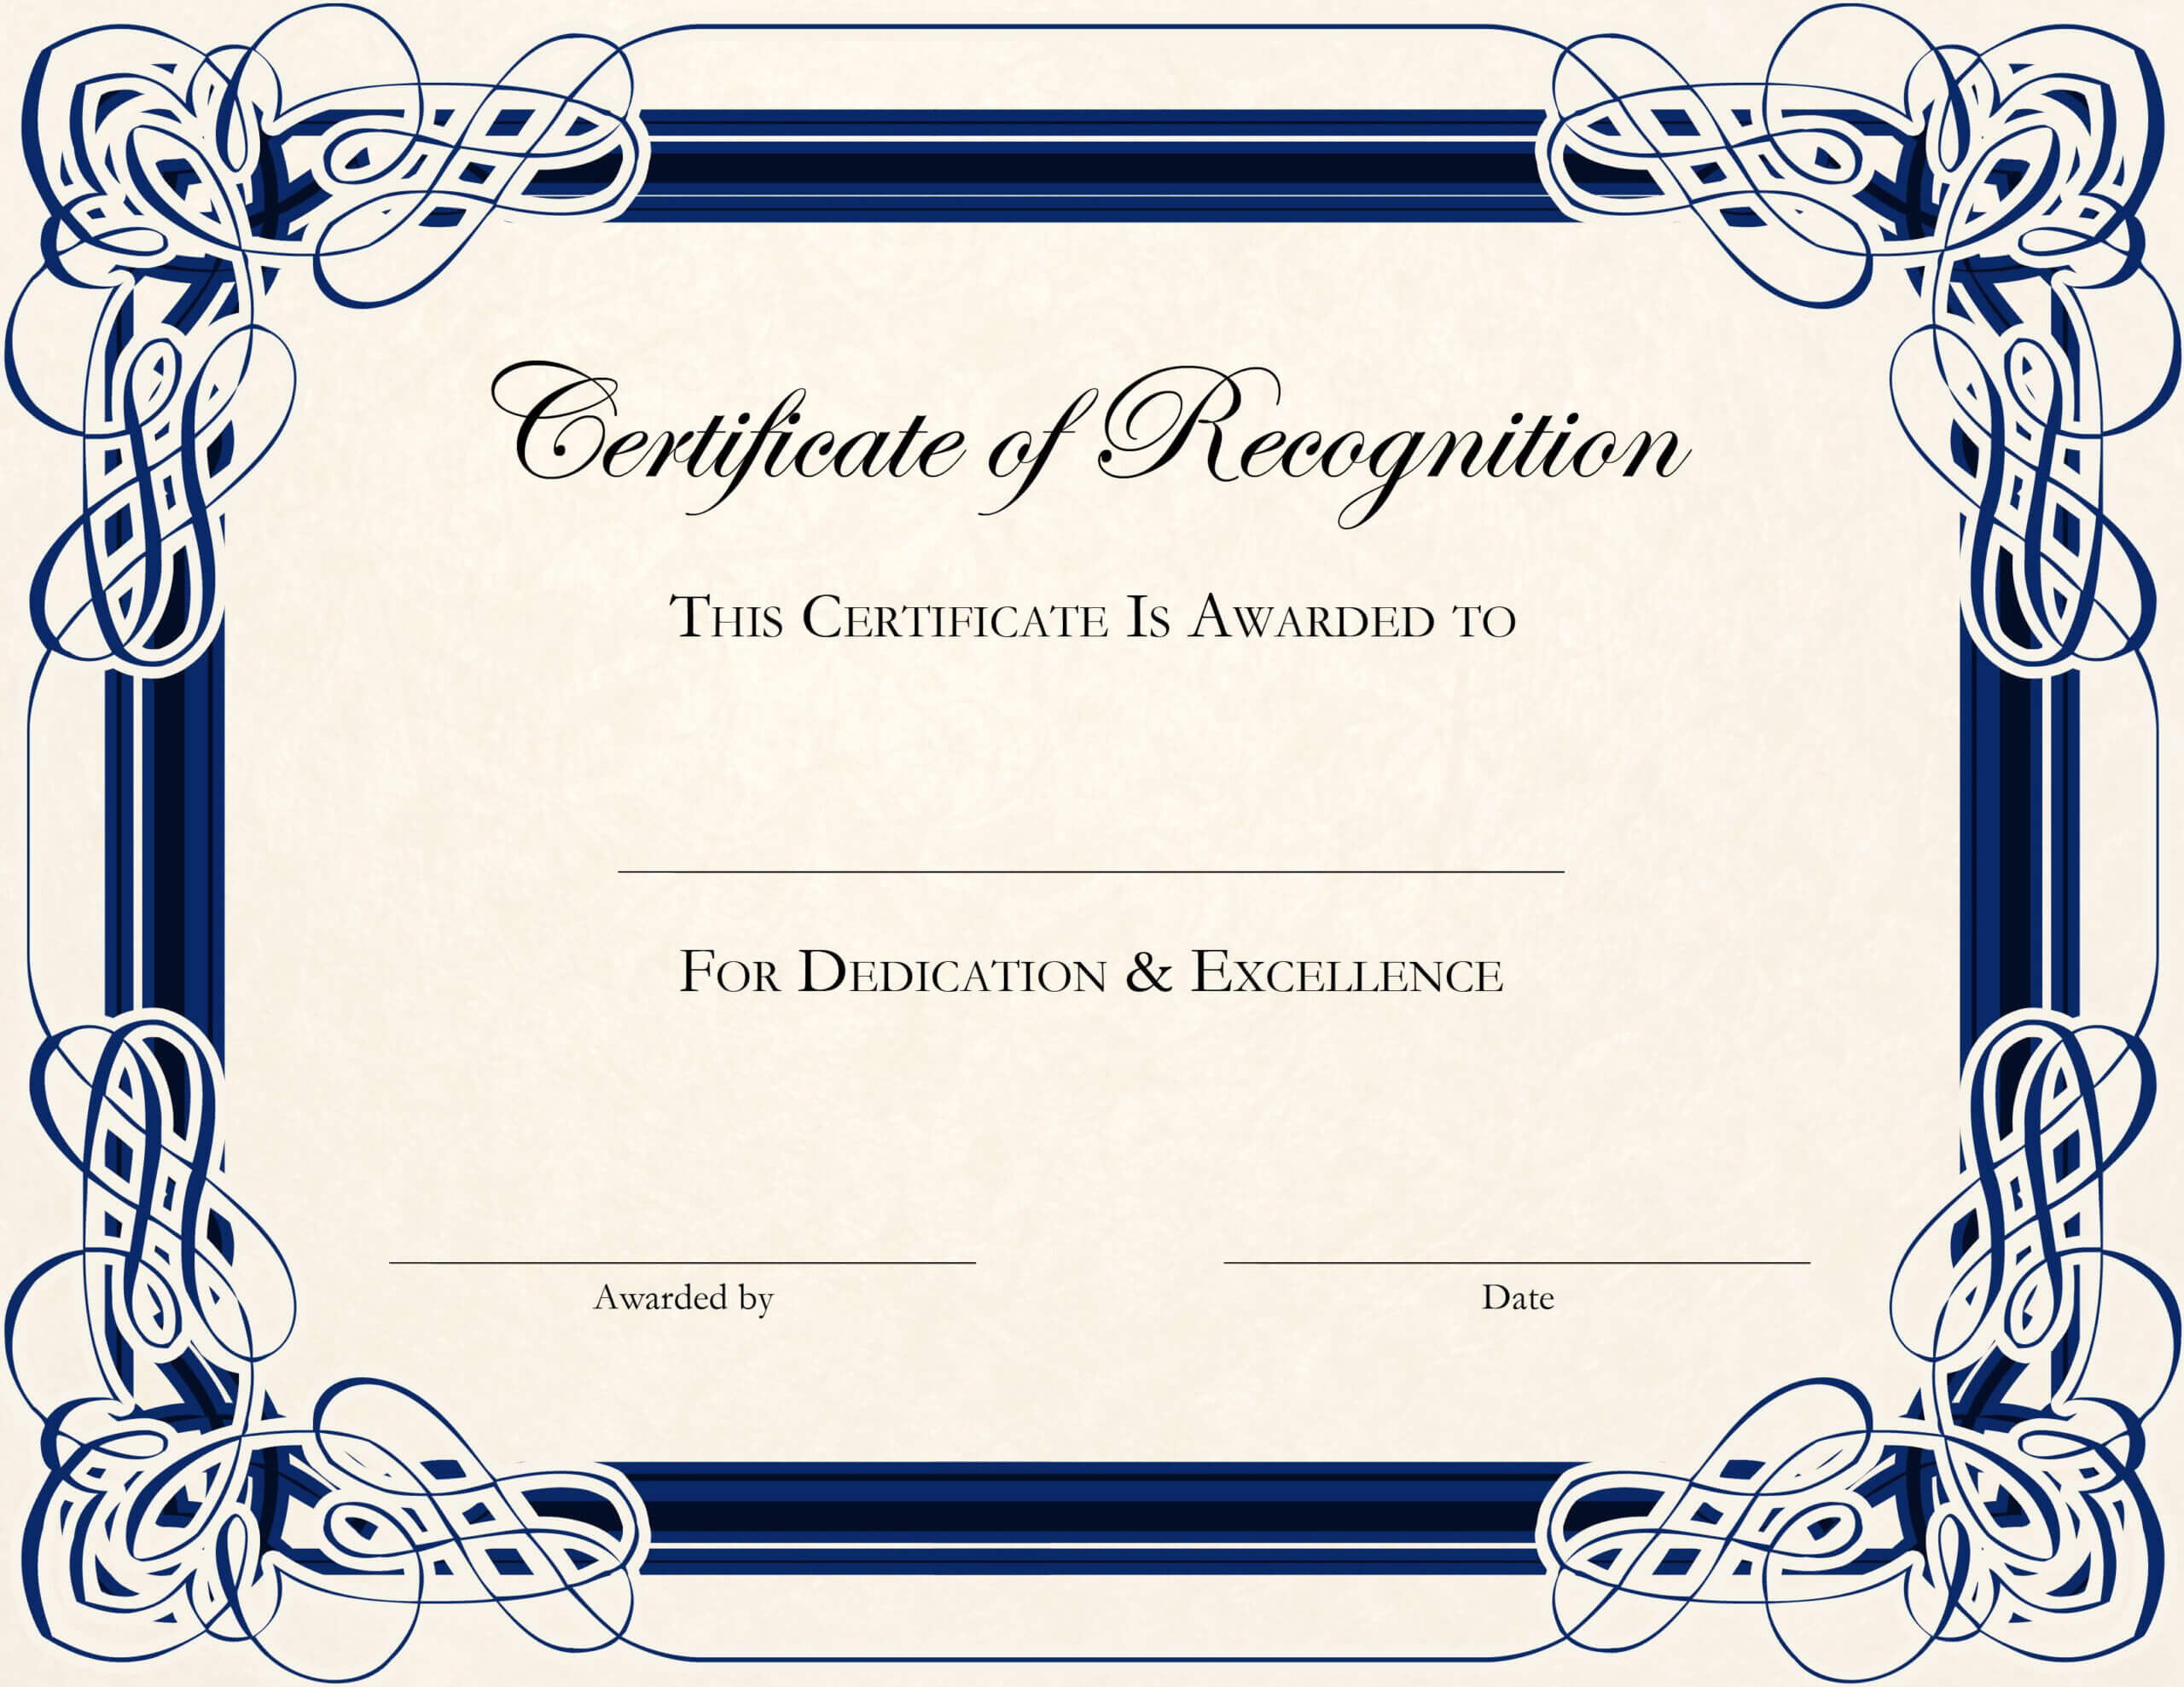 Certificate Template Designs Recognition Docs | Certificate With Certificate Of Appreciation Template Doc